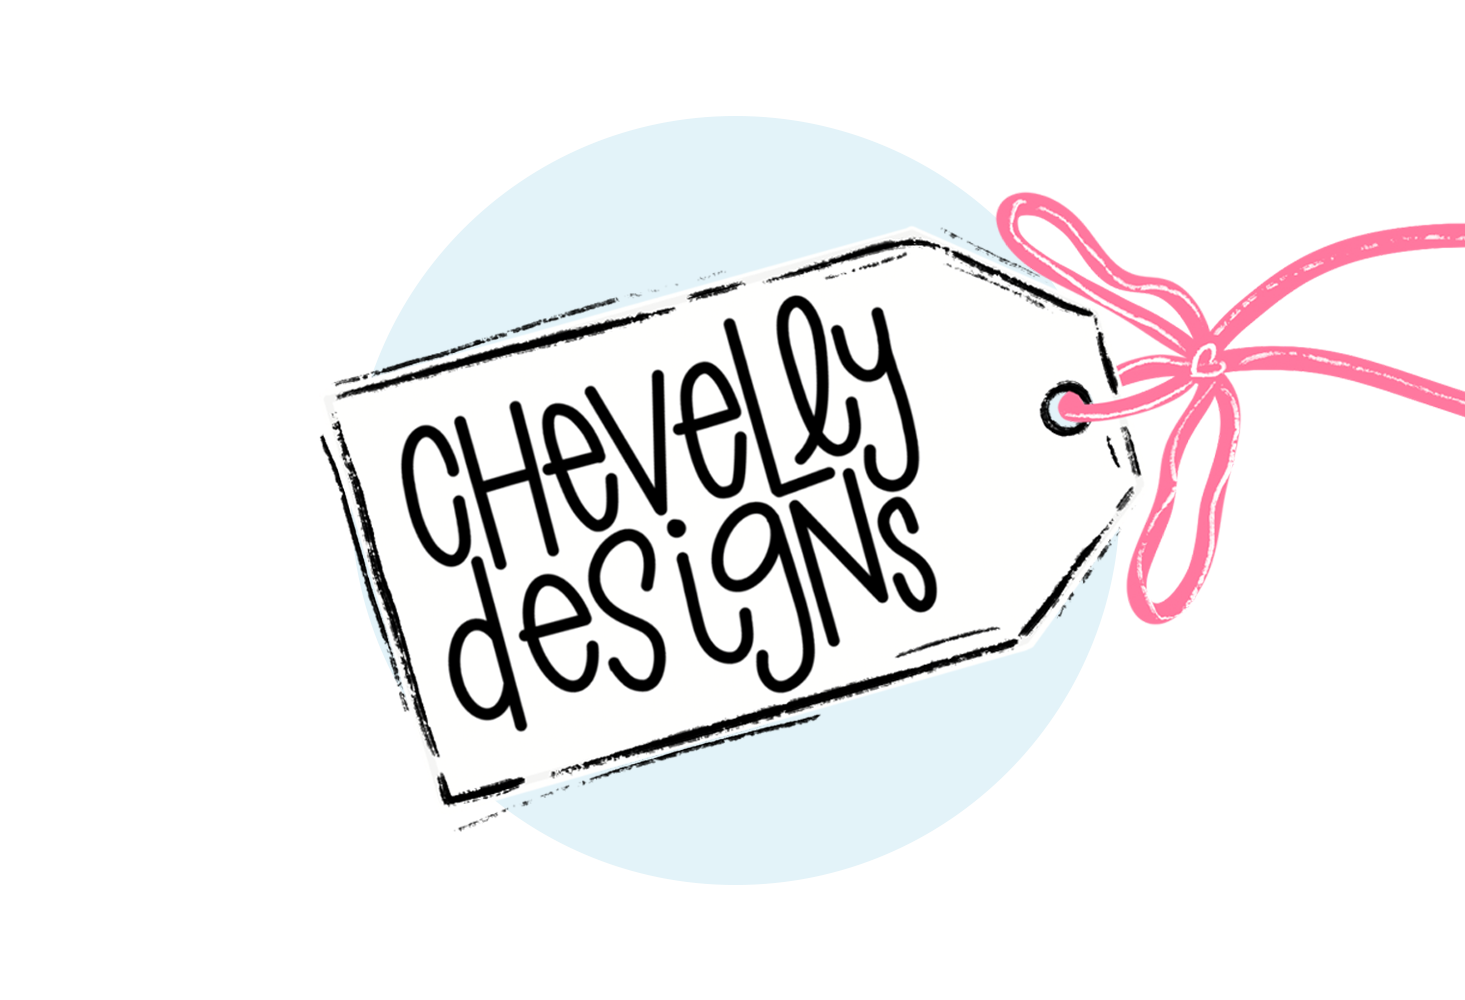 Chevelly Designs